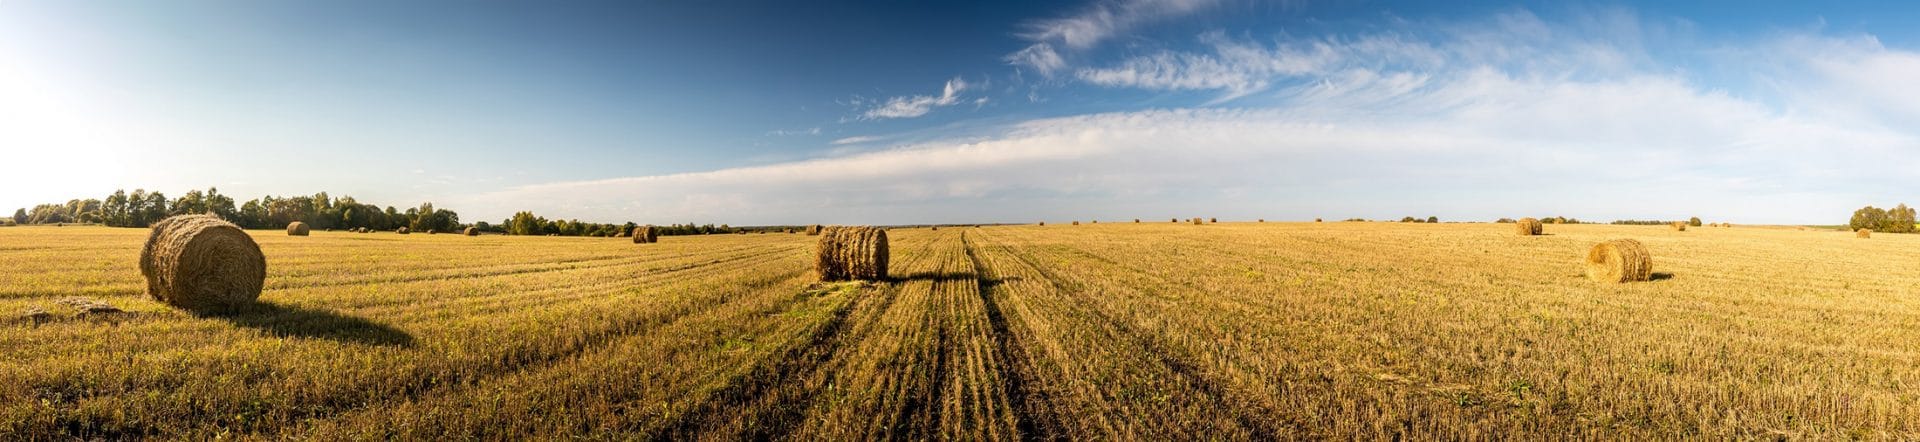 Harvest-field